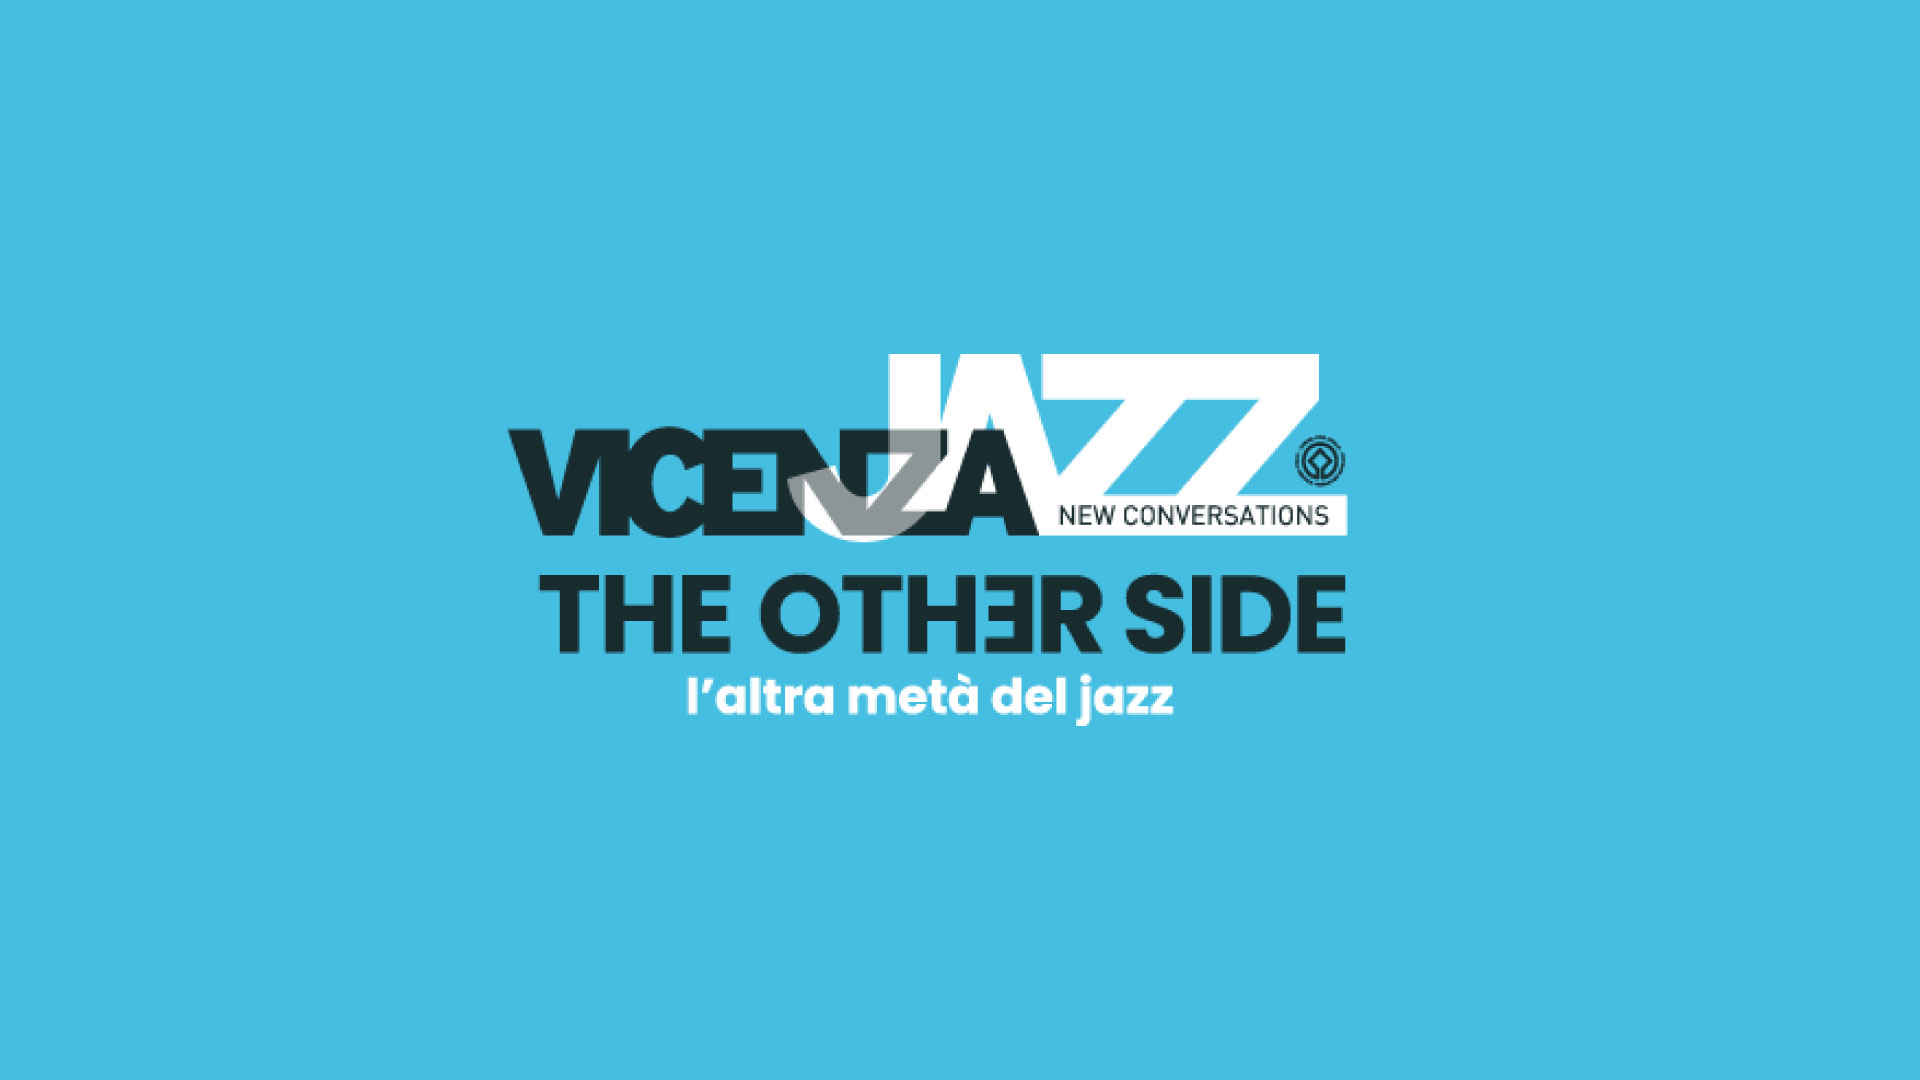 Vicenza Jazz - New Conversations